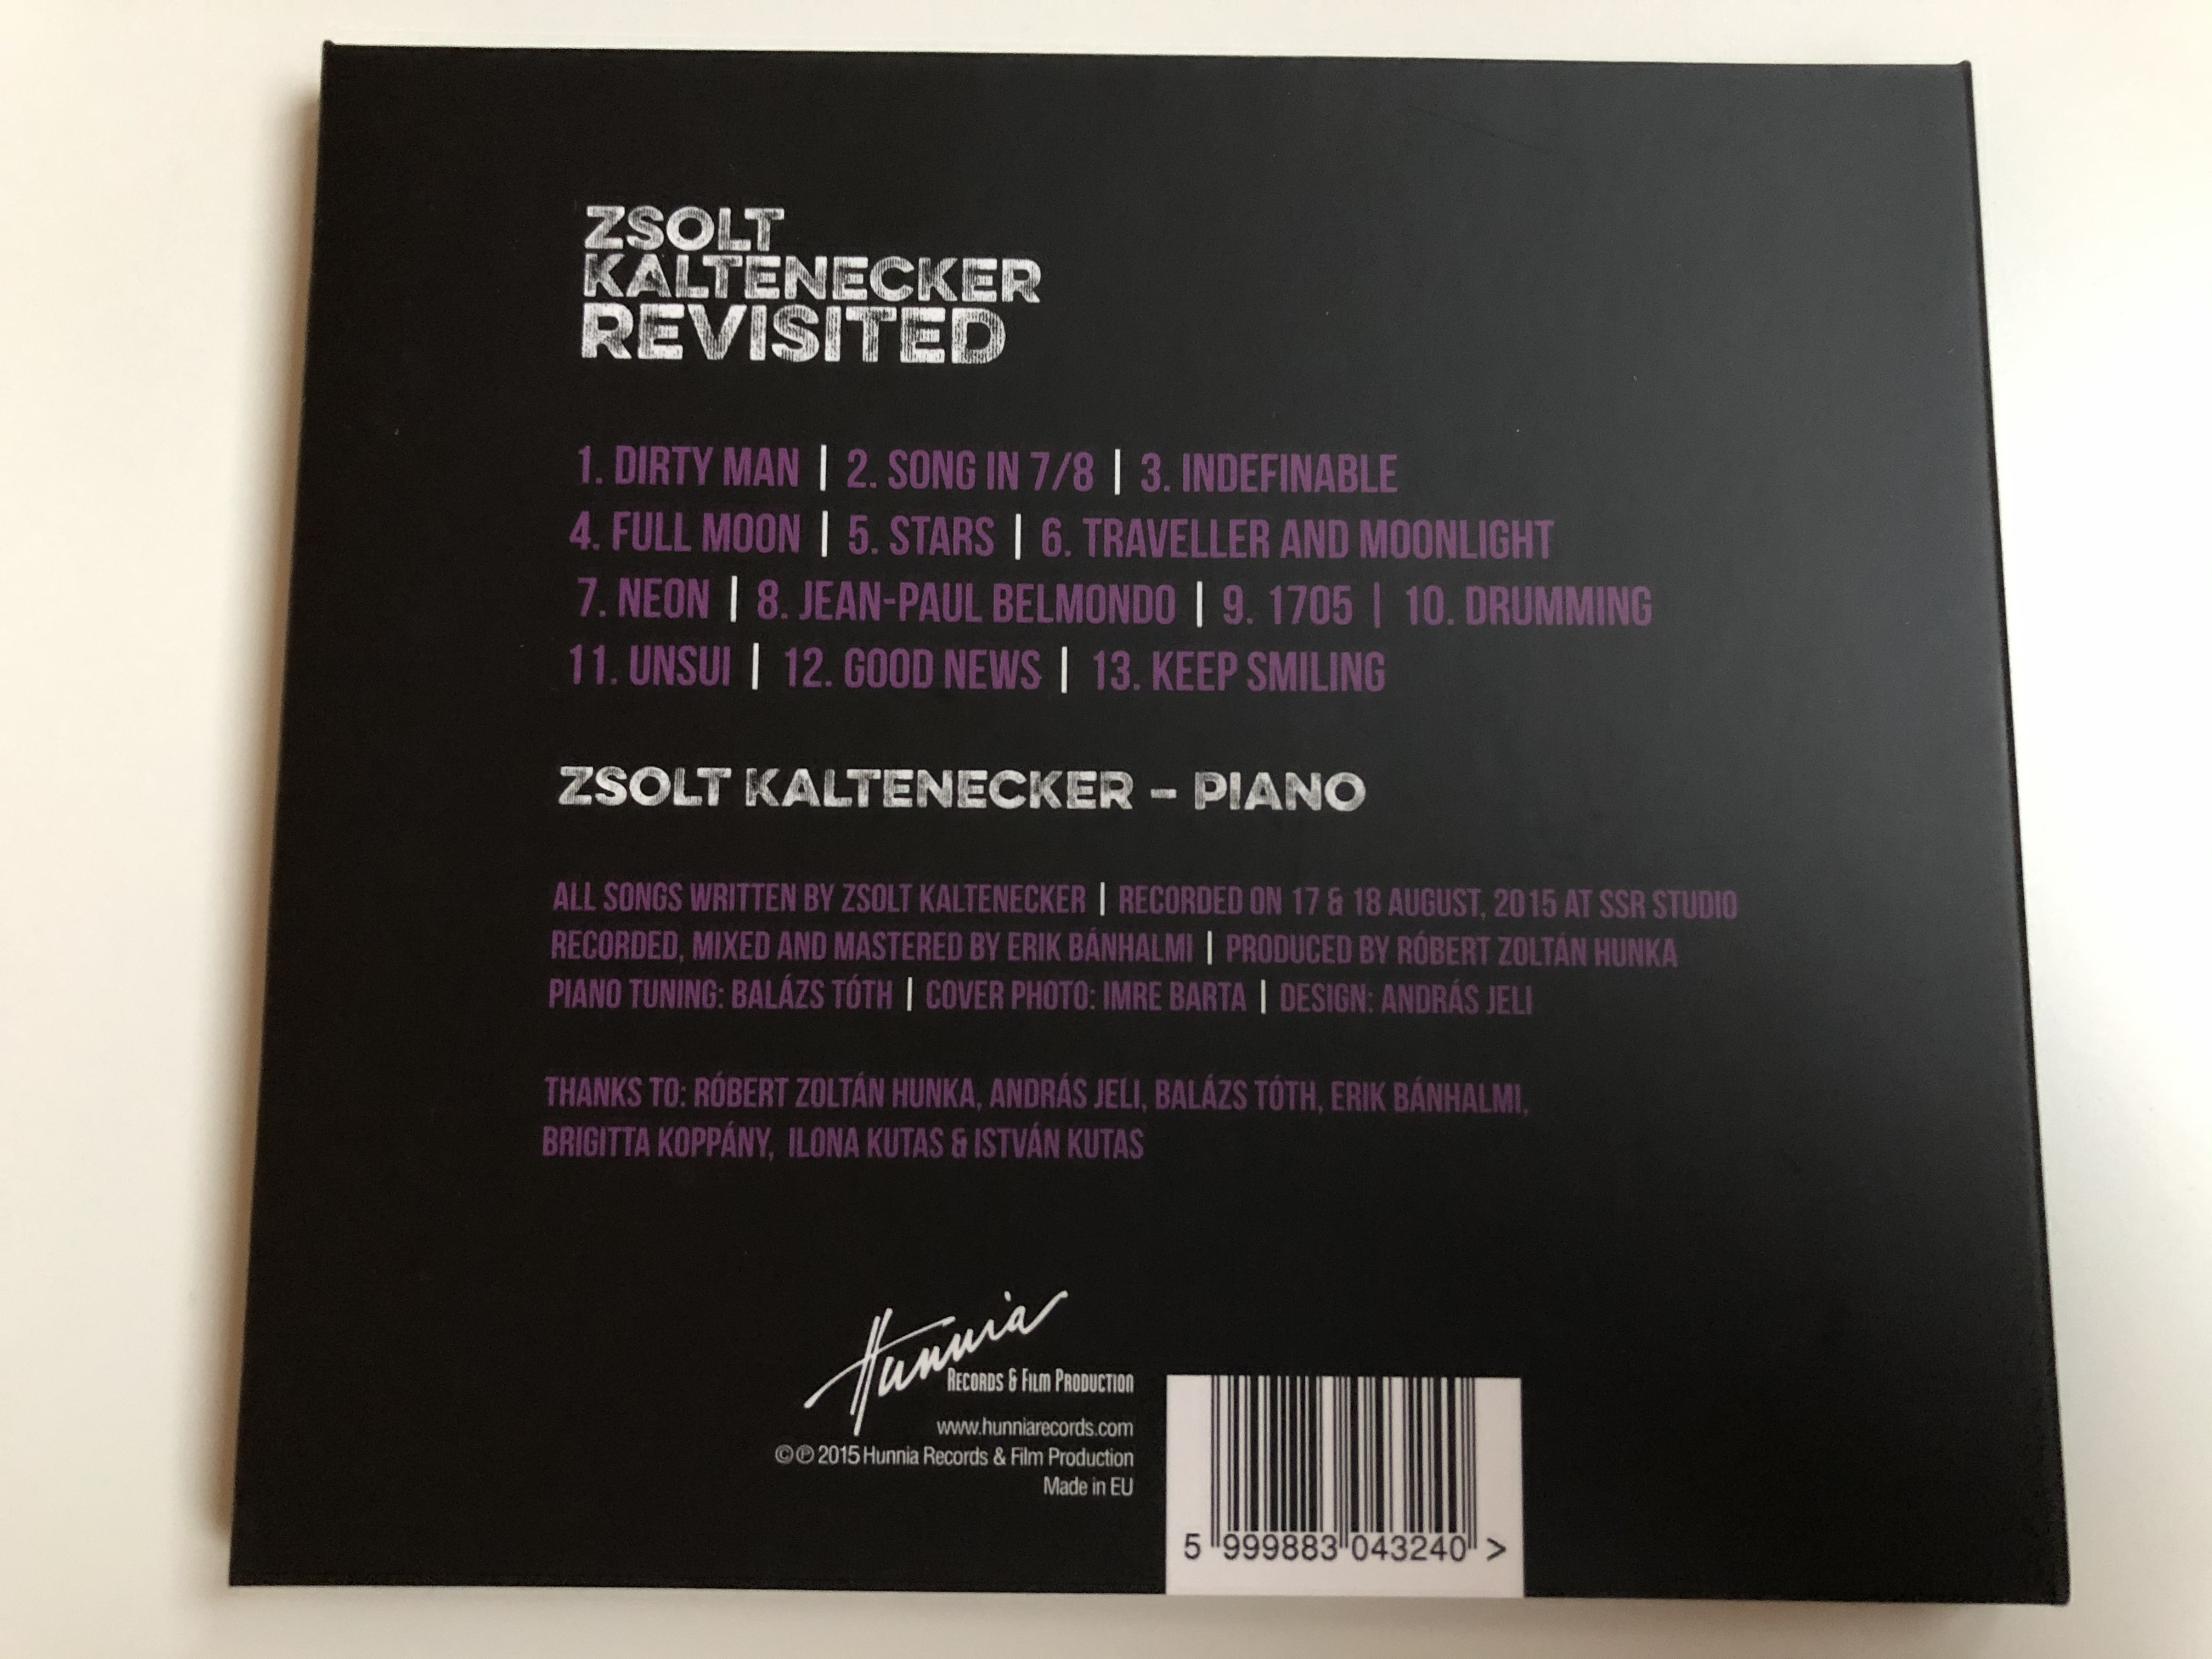 zsolt-kaltenecker-revisited-hunnia-records-film-production-audio-cd-2015-hrcd-1515-4-.jpg